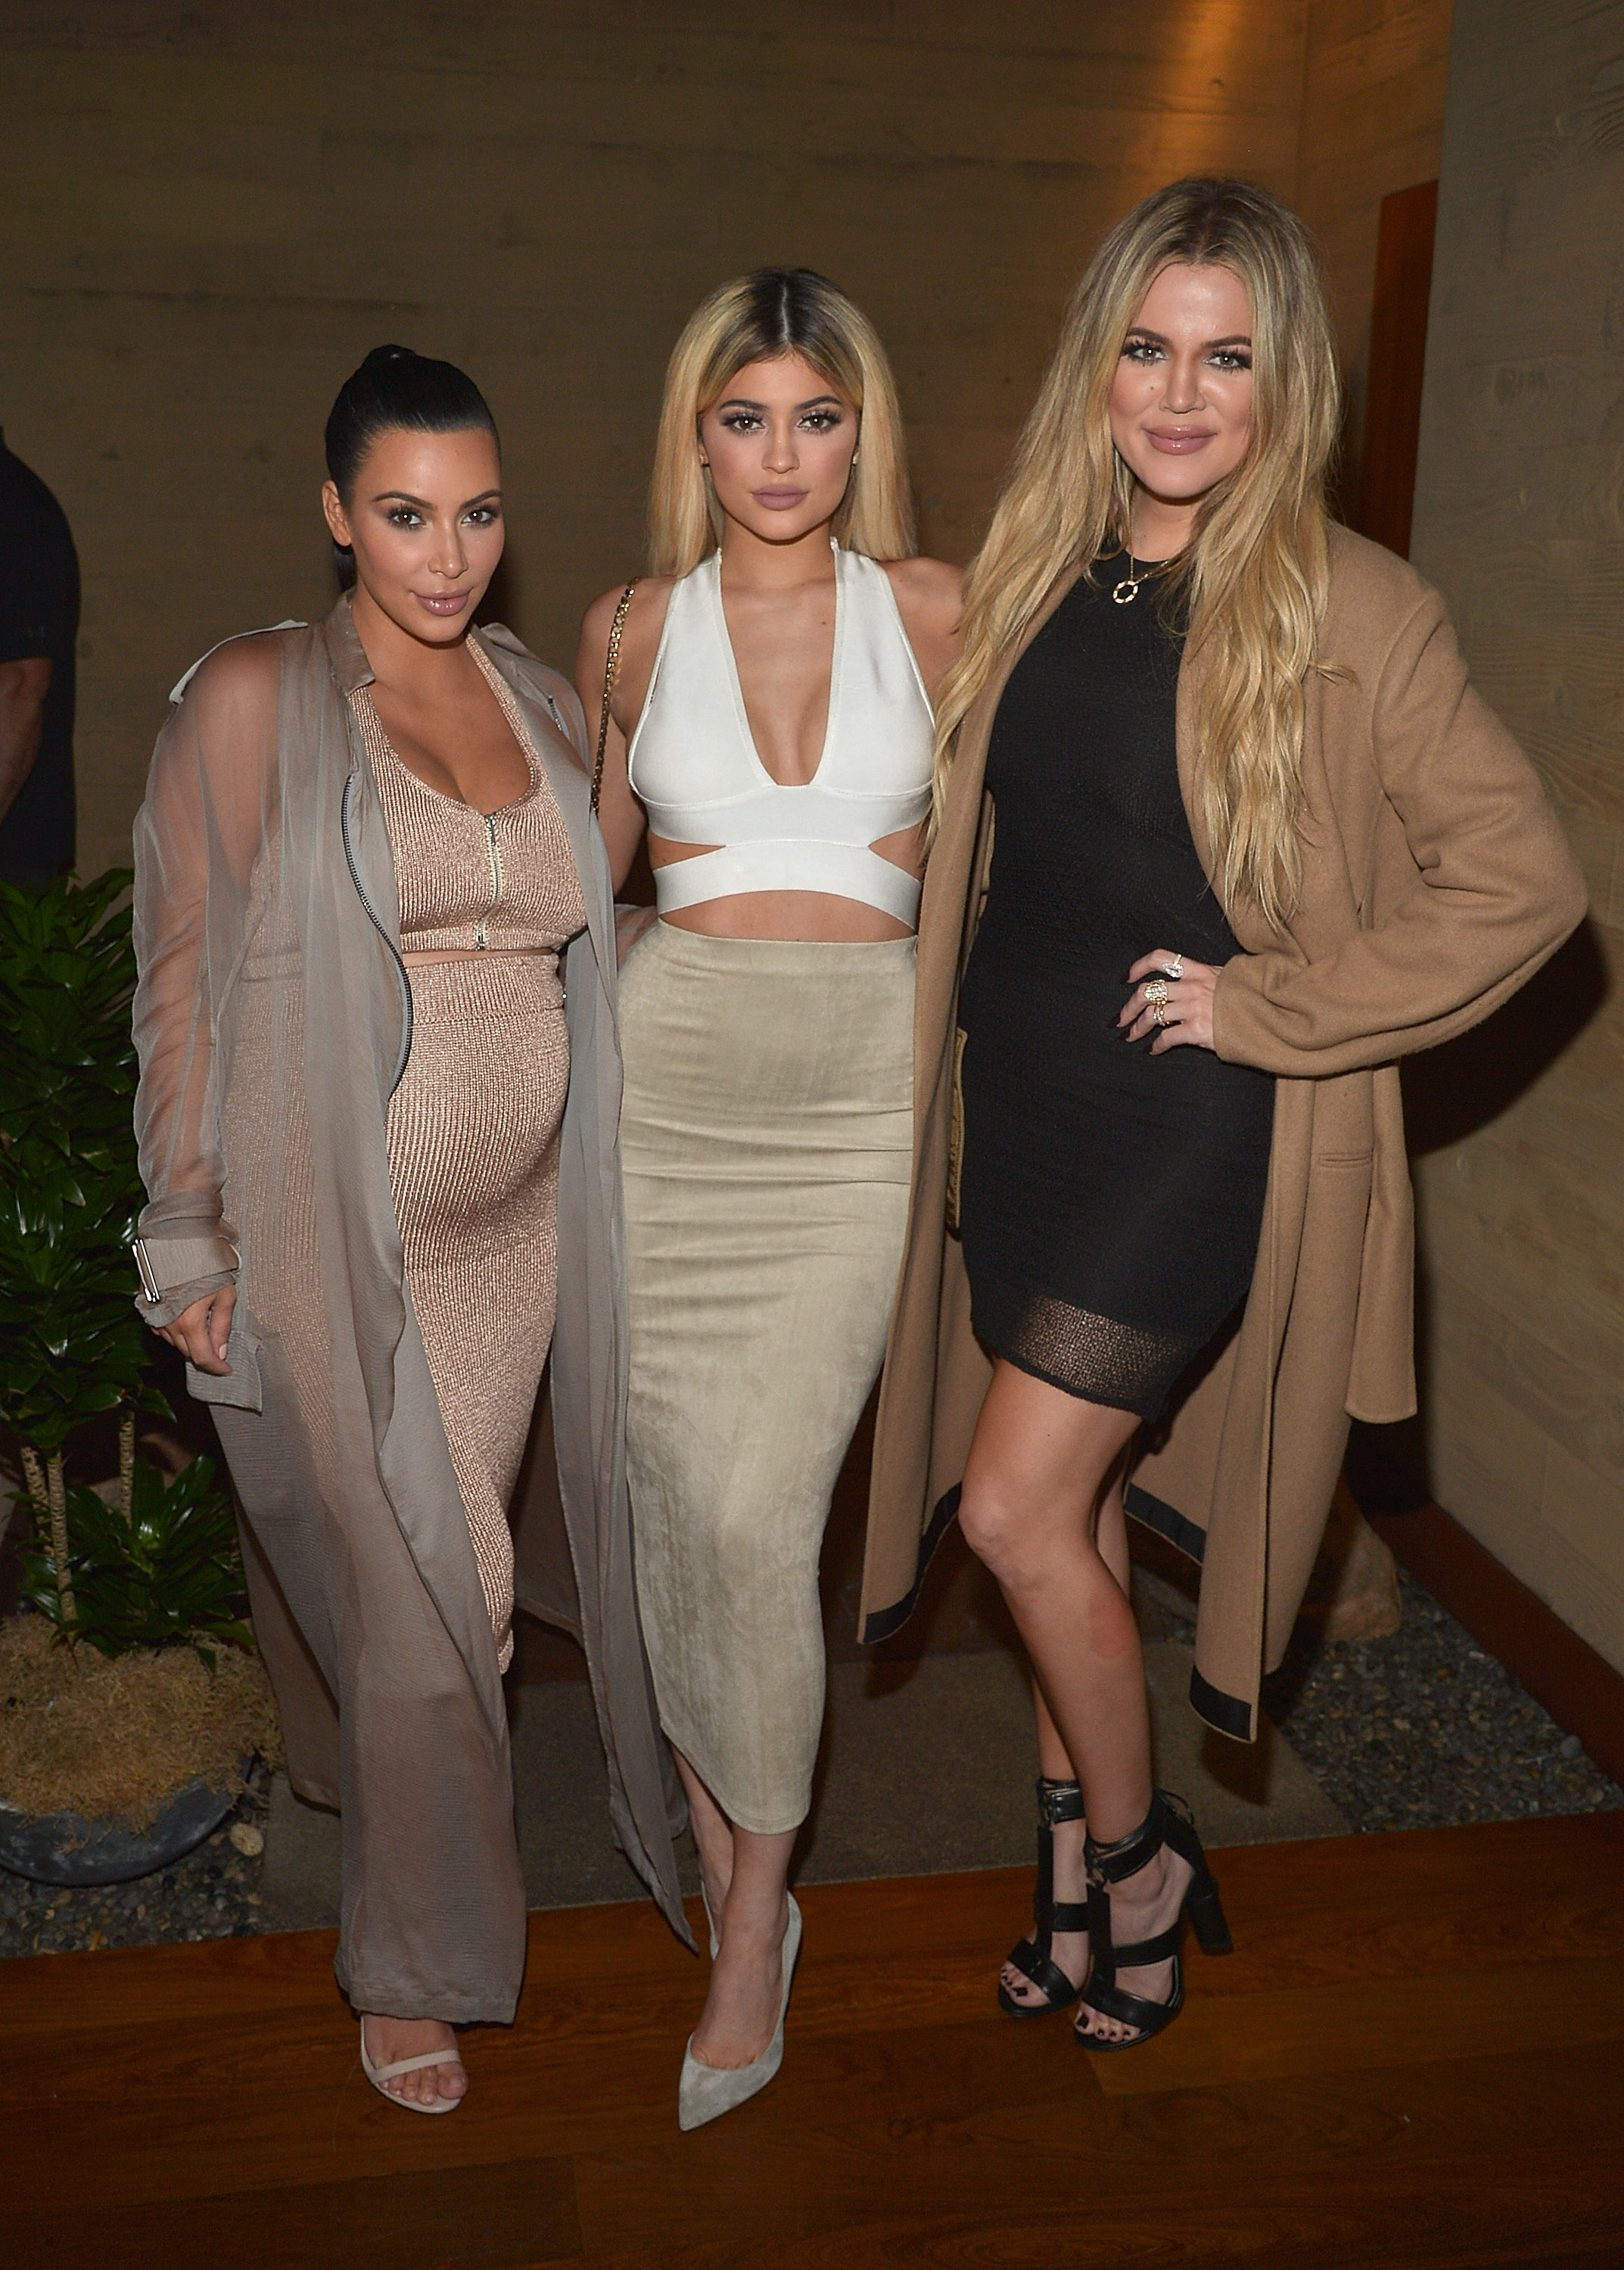 Kim Kardashian Unedited Oscars Photo Sparks Discourse